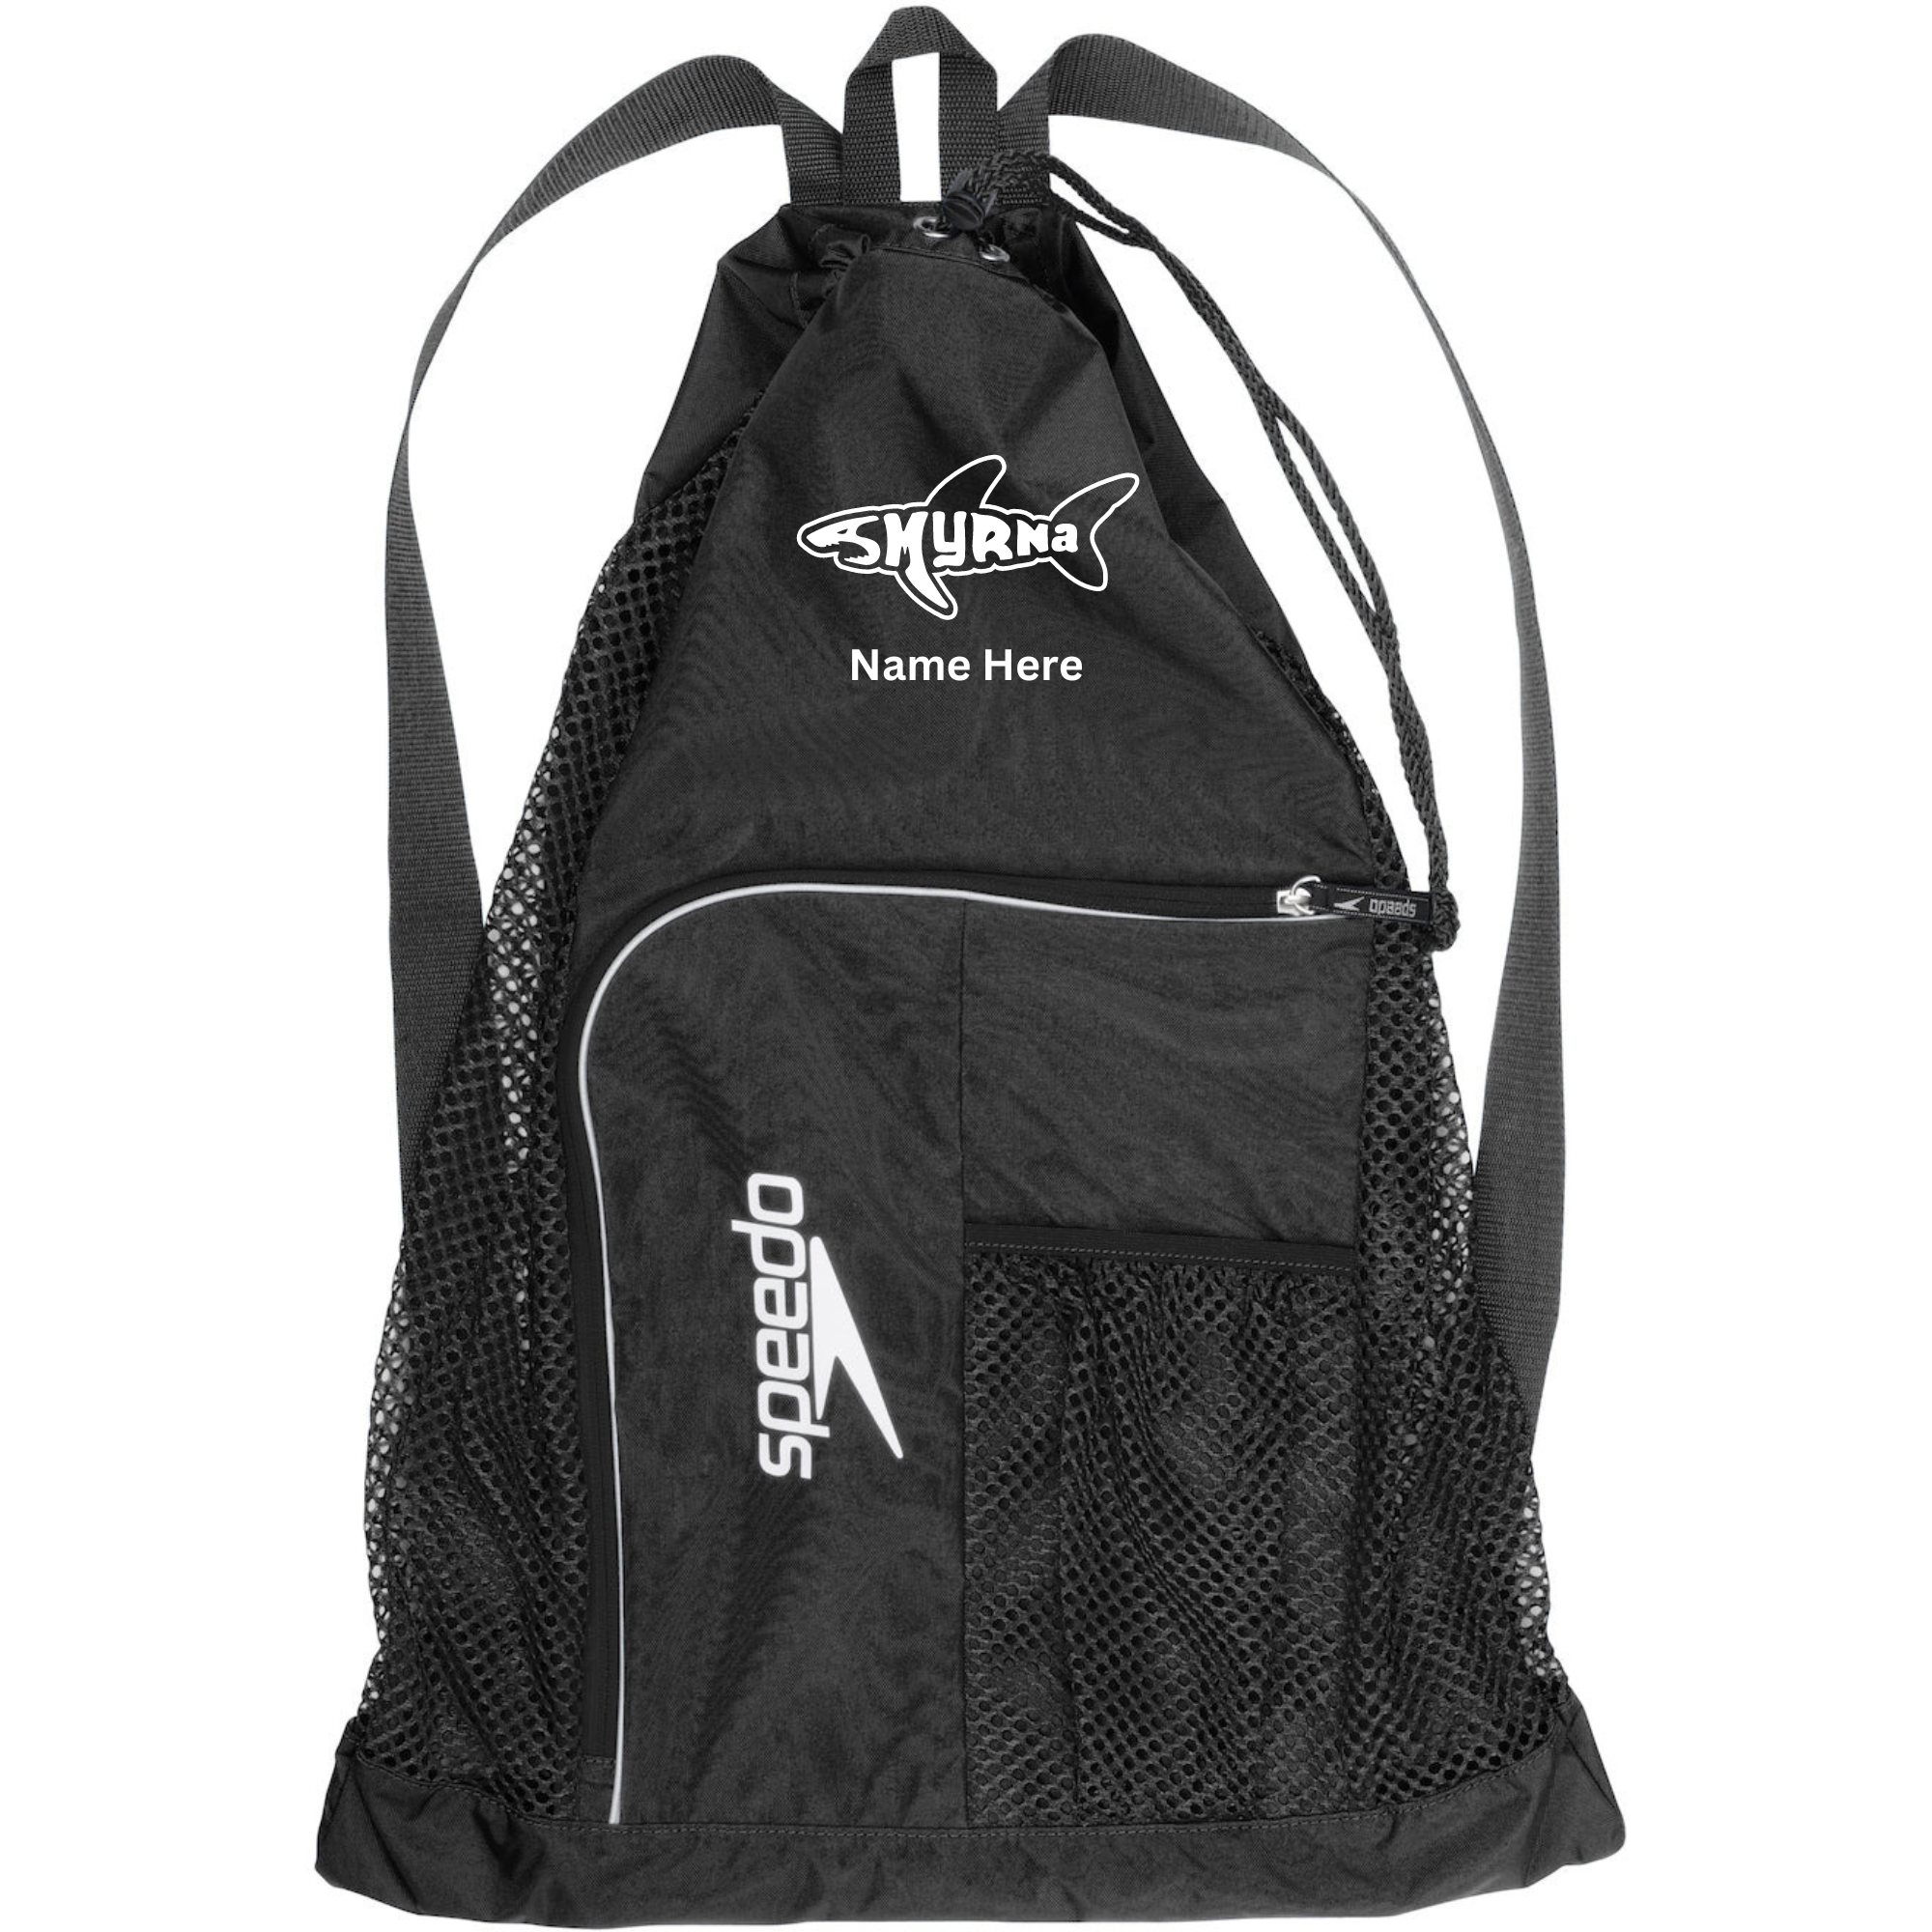 Speedo Deluxe Ventilator Backpack (Customized) - Smyrna Sharks